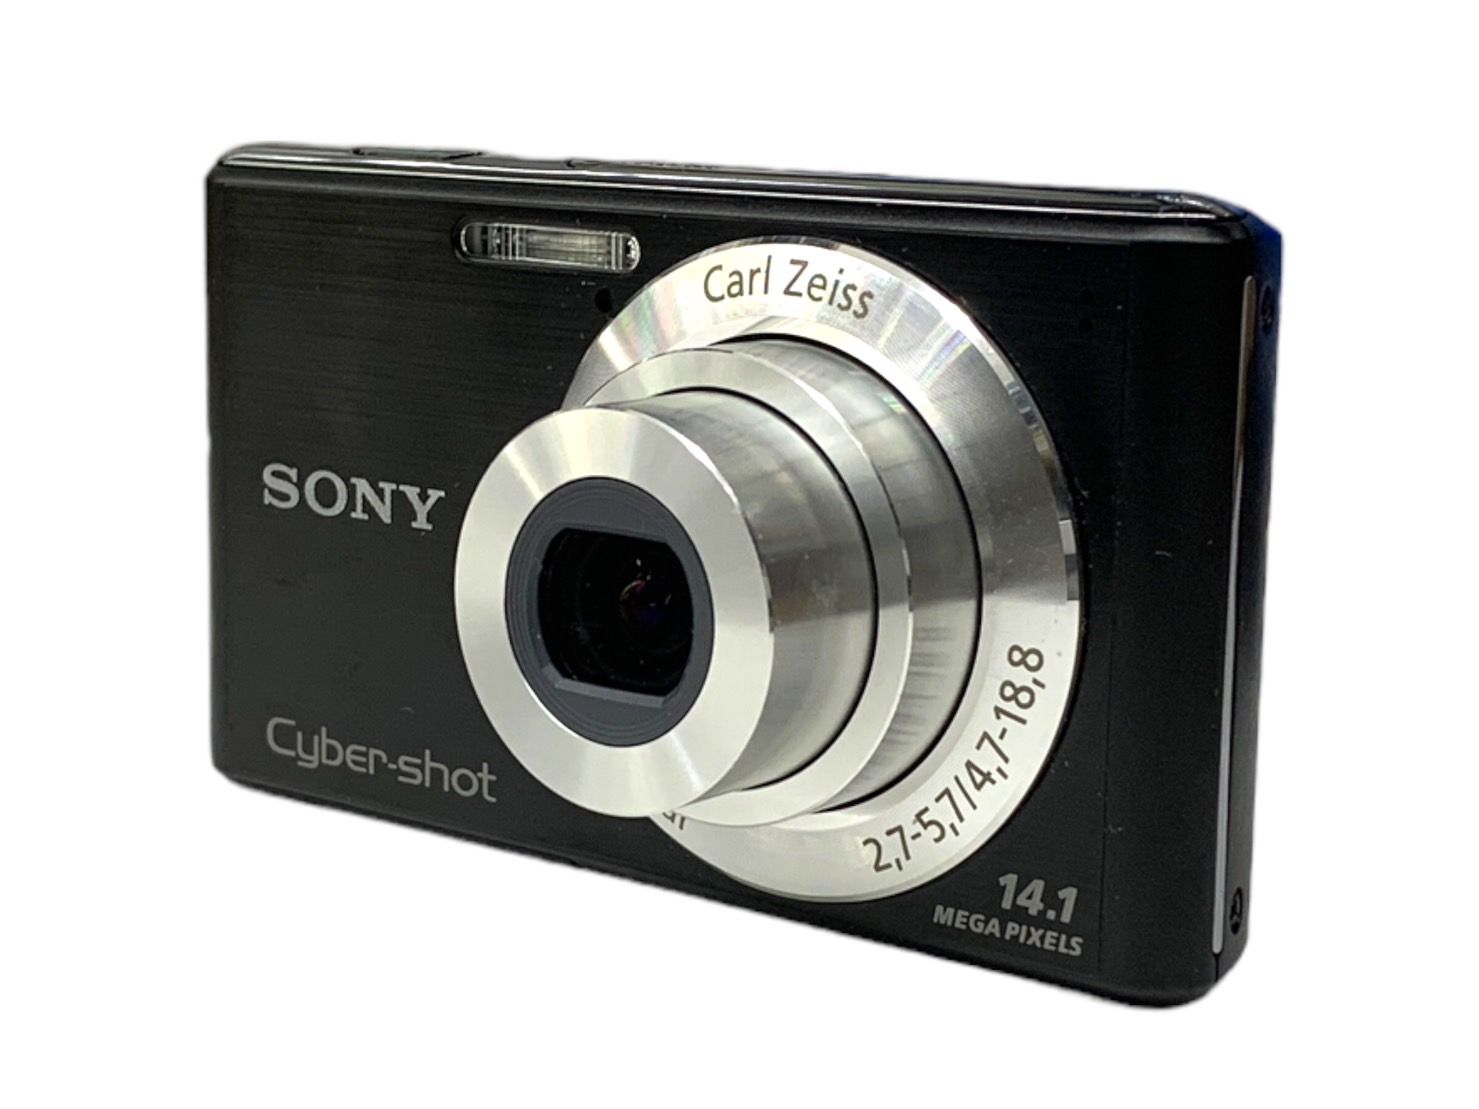 SONY (ソニー) Cyber-shot サイバーショット デジタルカメラ